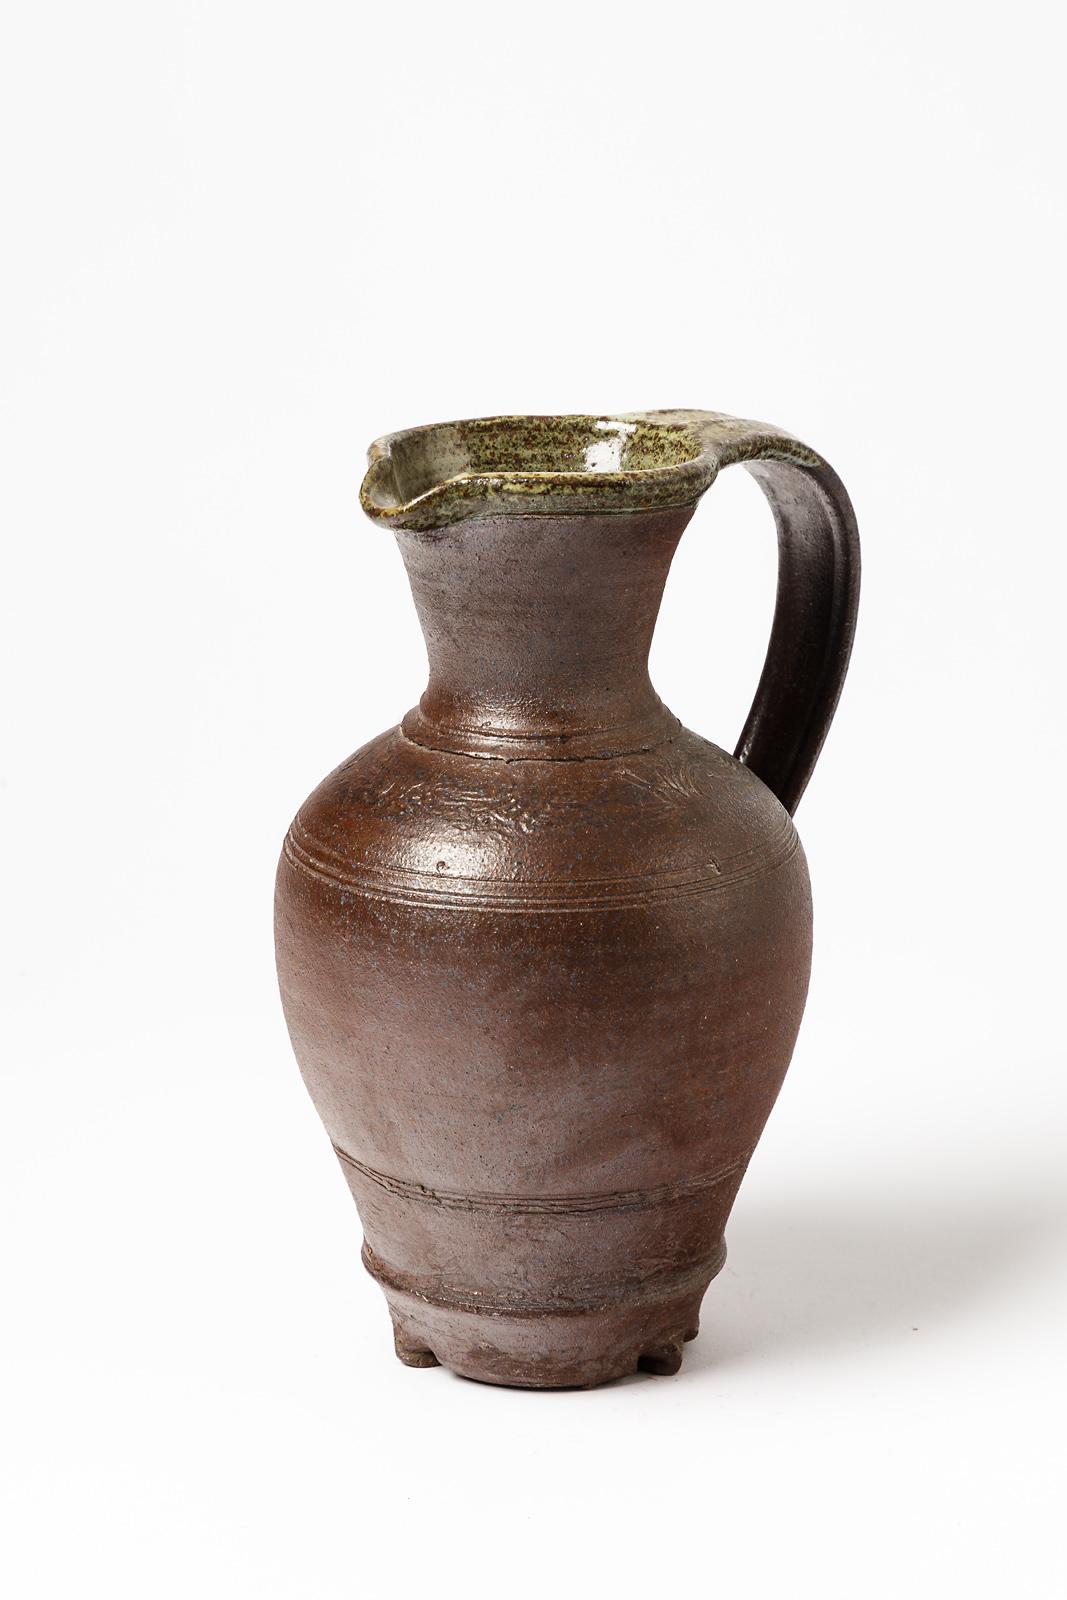 Rouillard

Unique handmade mid XXth century ceramic pitcher

Original brown stoneware ceramic color

Signed under the base

Original perfect condition

Measures: Height 21 cm Large 15 cm.